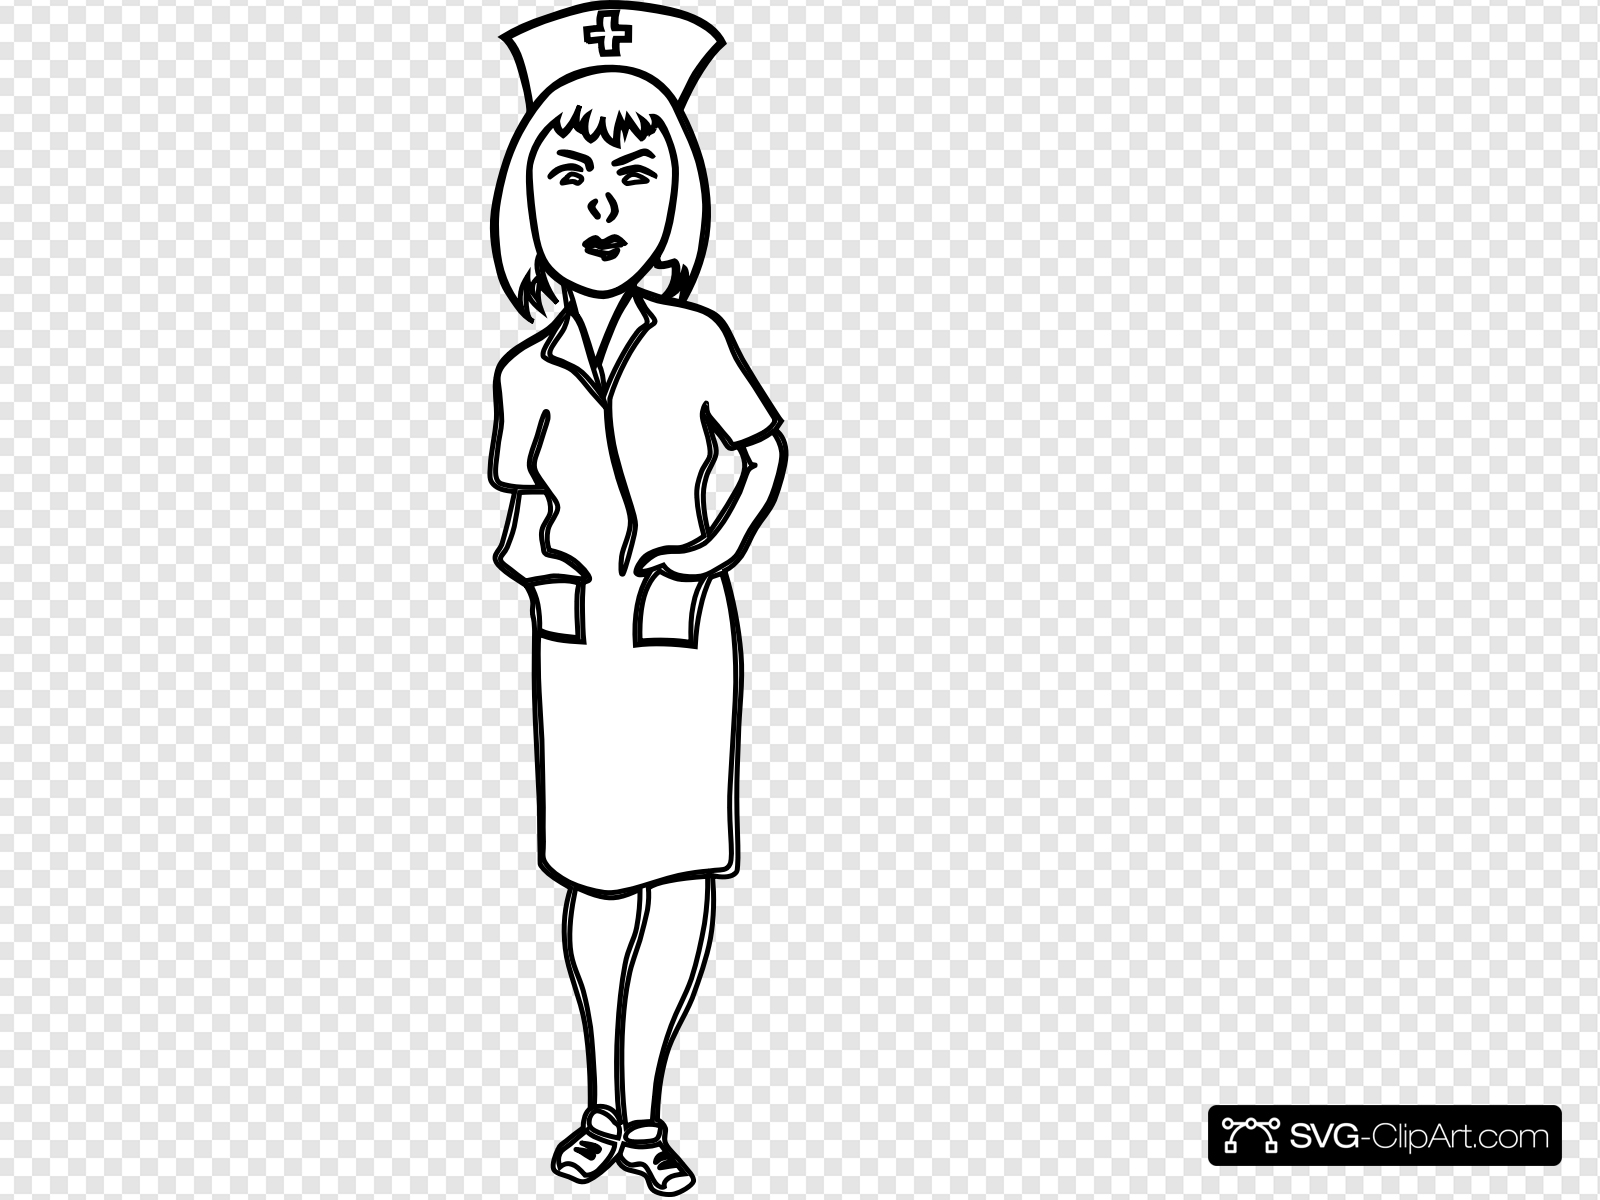 Nurse Outline Clip art, Icon and SVG